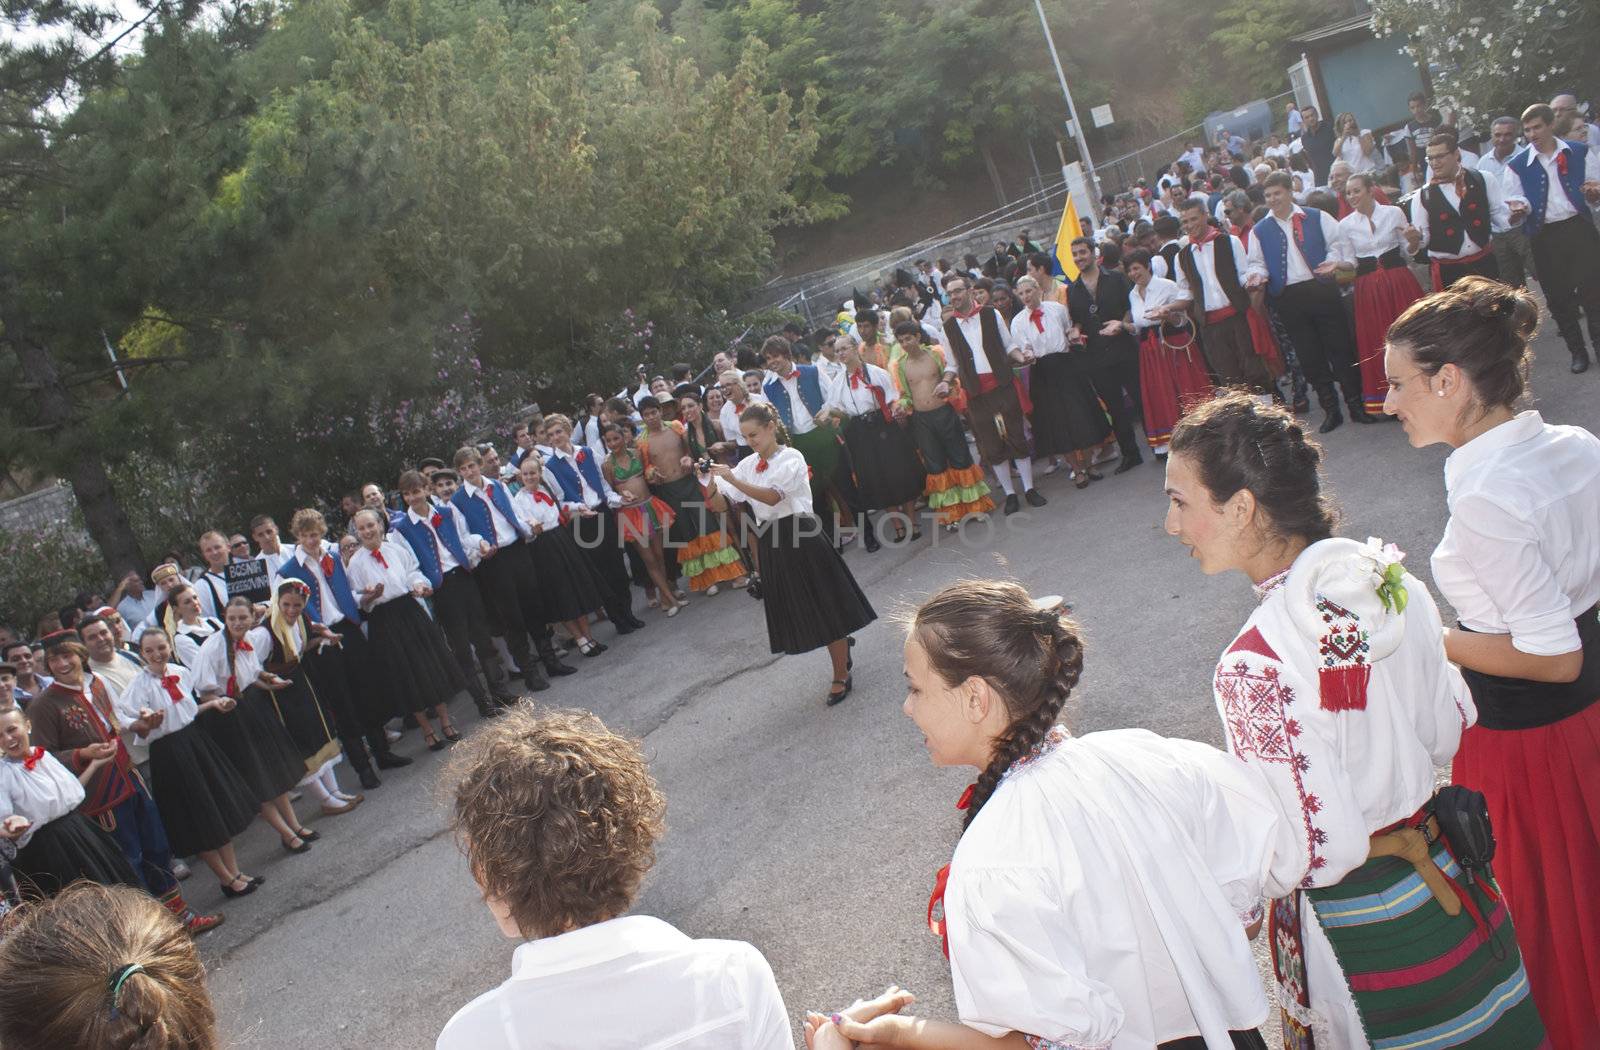 POLIZZI GENEROSA, SICILY - AUGUST 19:International folk groups at the "Festival of hazelnuts",dance and parade through the city: August 19, 2012 in Polizzi Generosa,Sicily, Italy